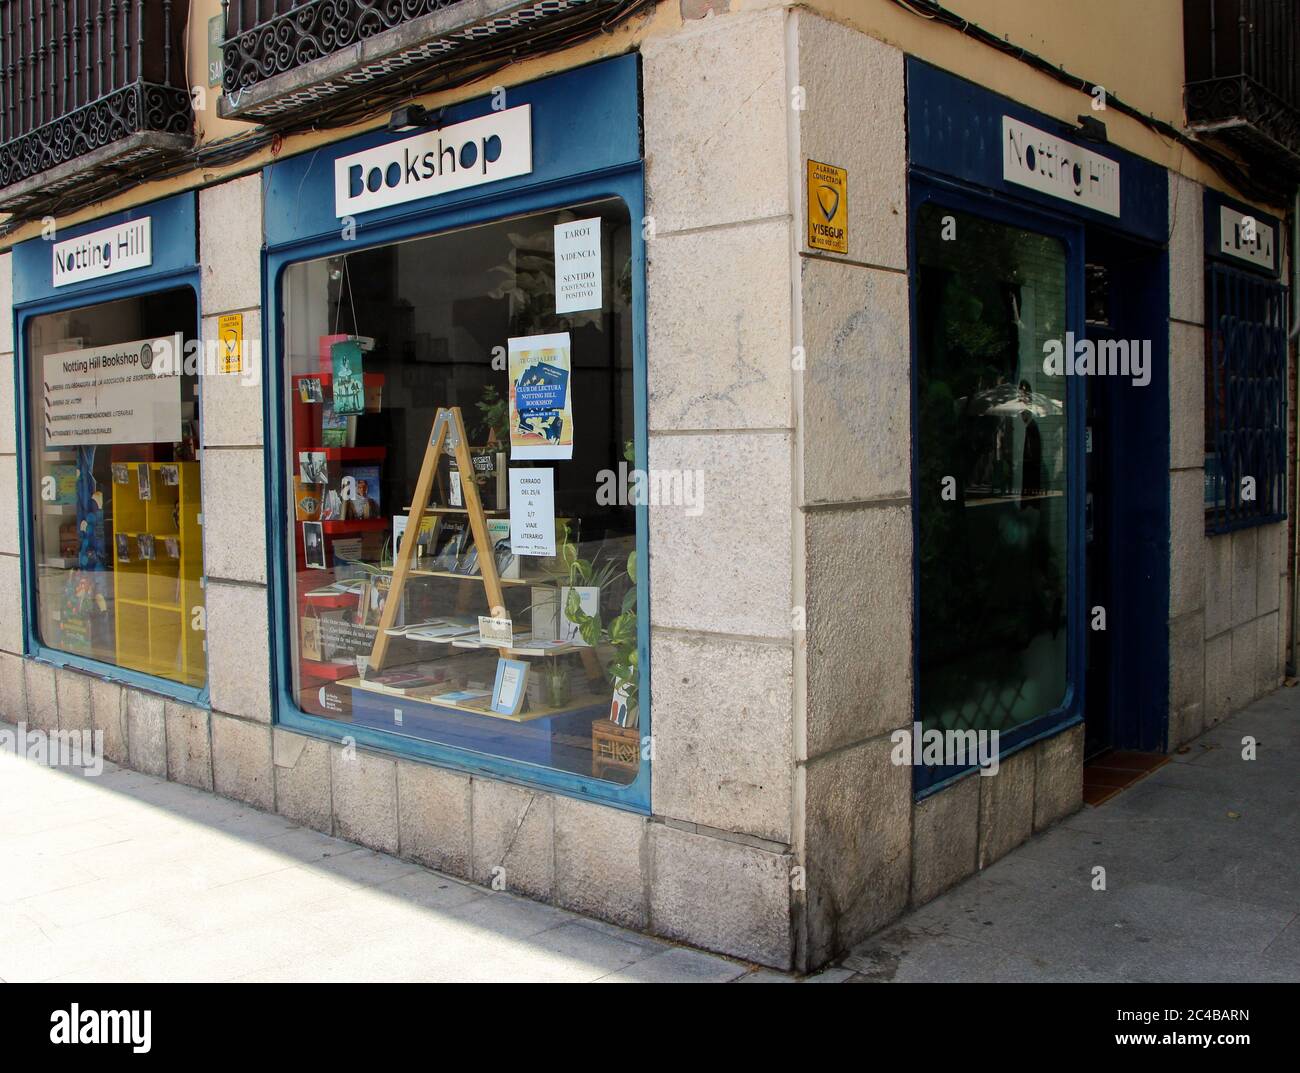 https://c8.alamy.com/comp/2C4BARN/notting-hill-bookshop-in-alcala-de-henares-madrid-spain-2C4BARN.jpg